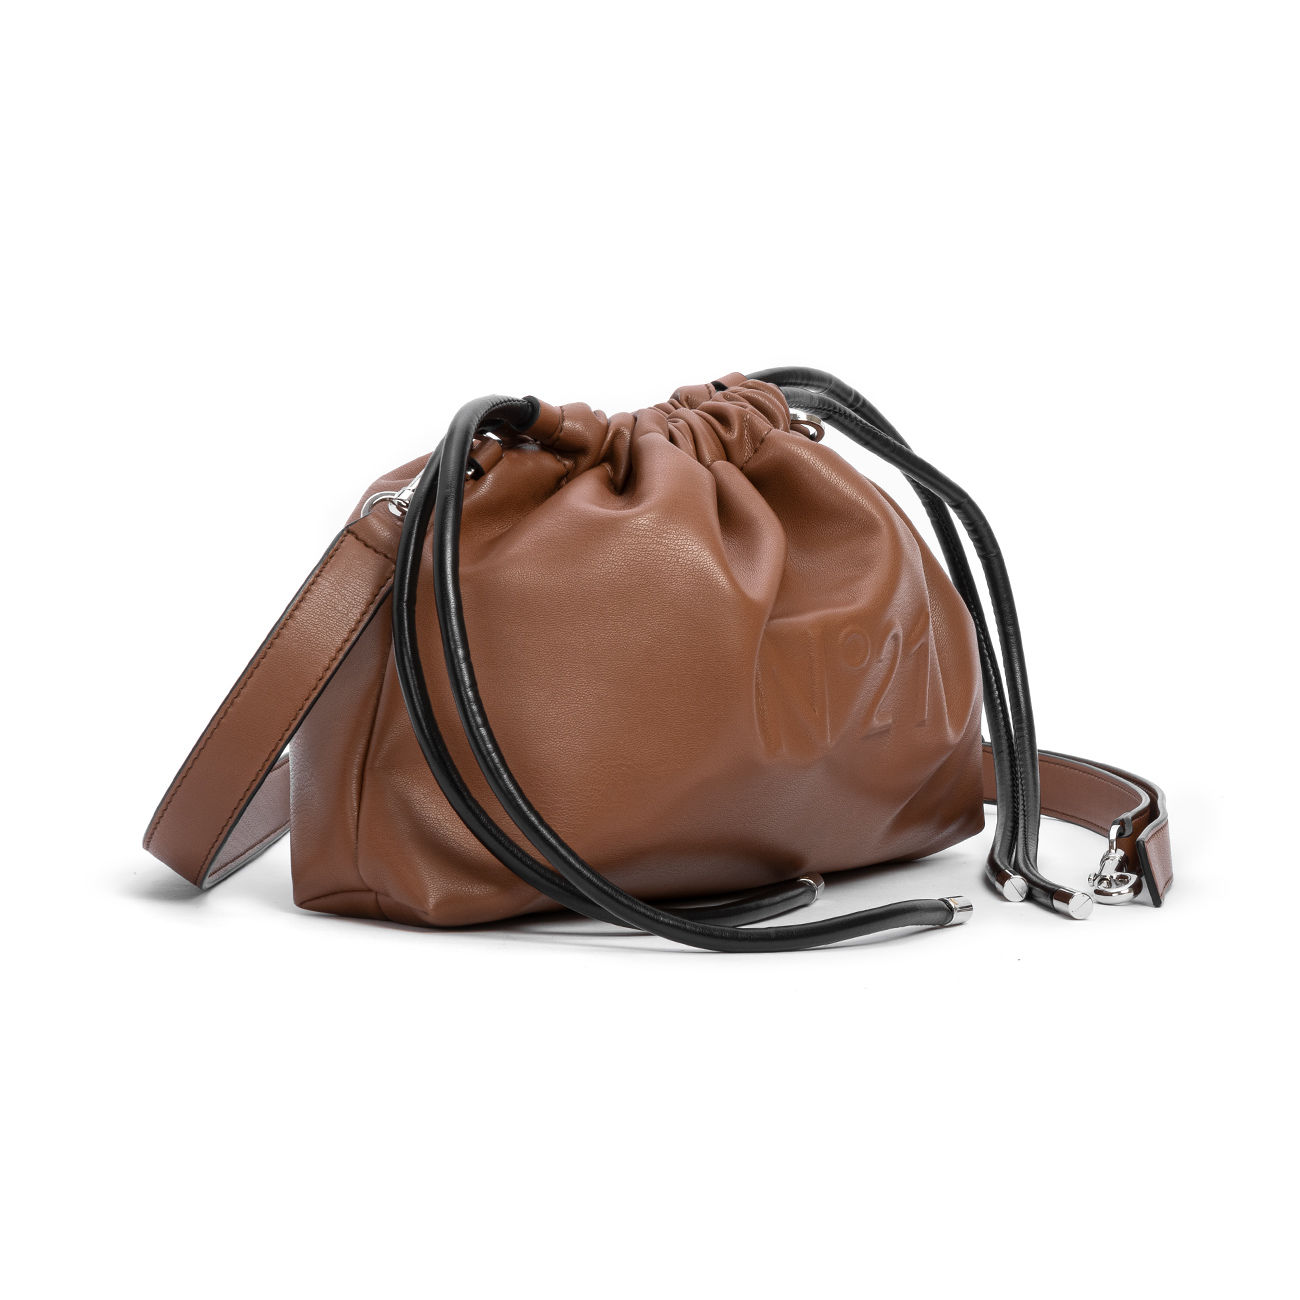 Eva leather clutch bag